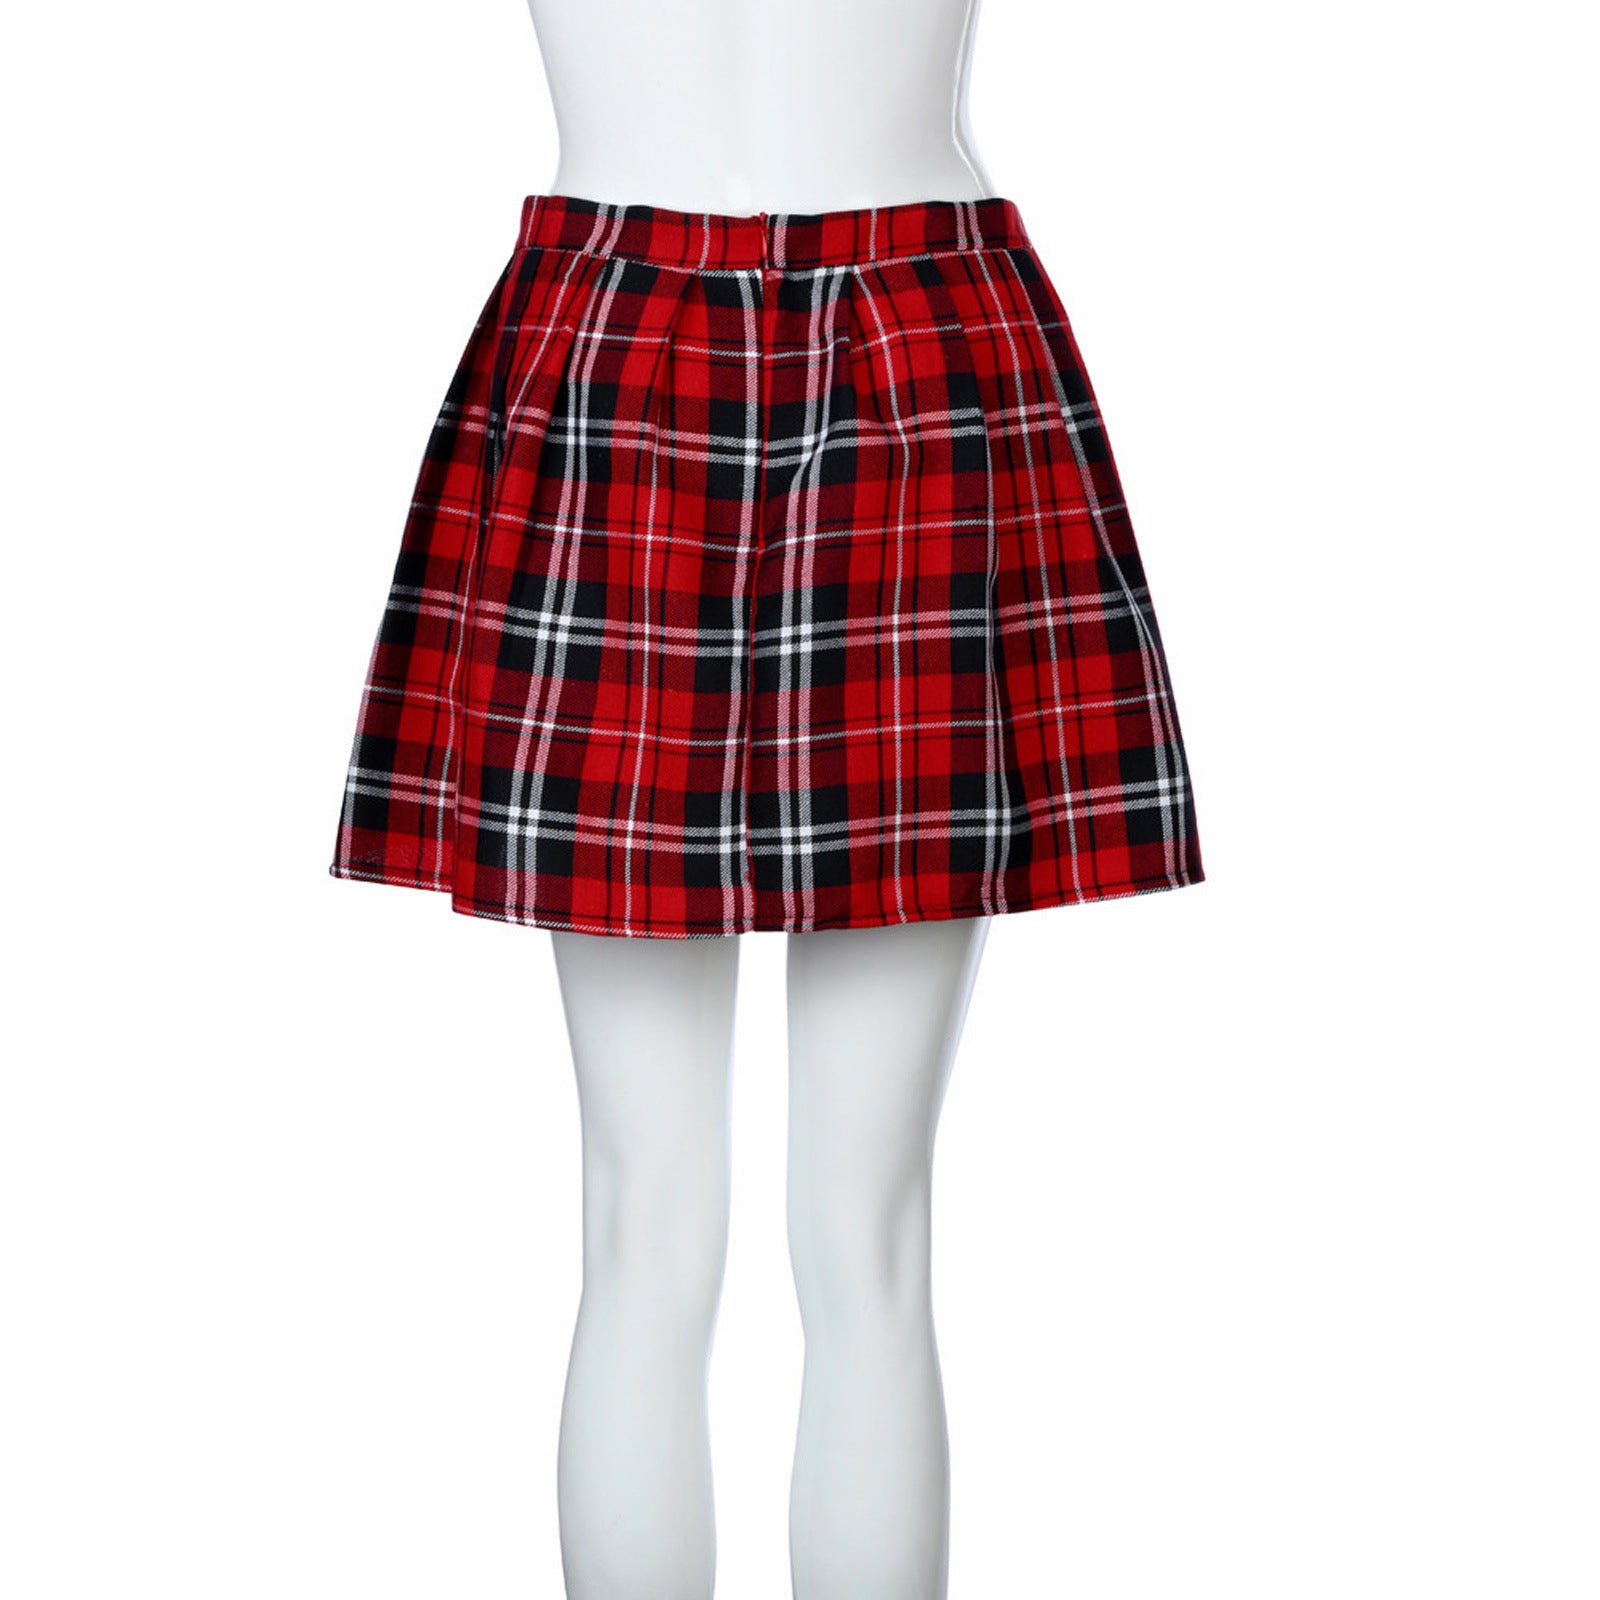 Fashionable Women's Plaid Skirt with Medium Waist